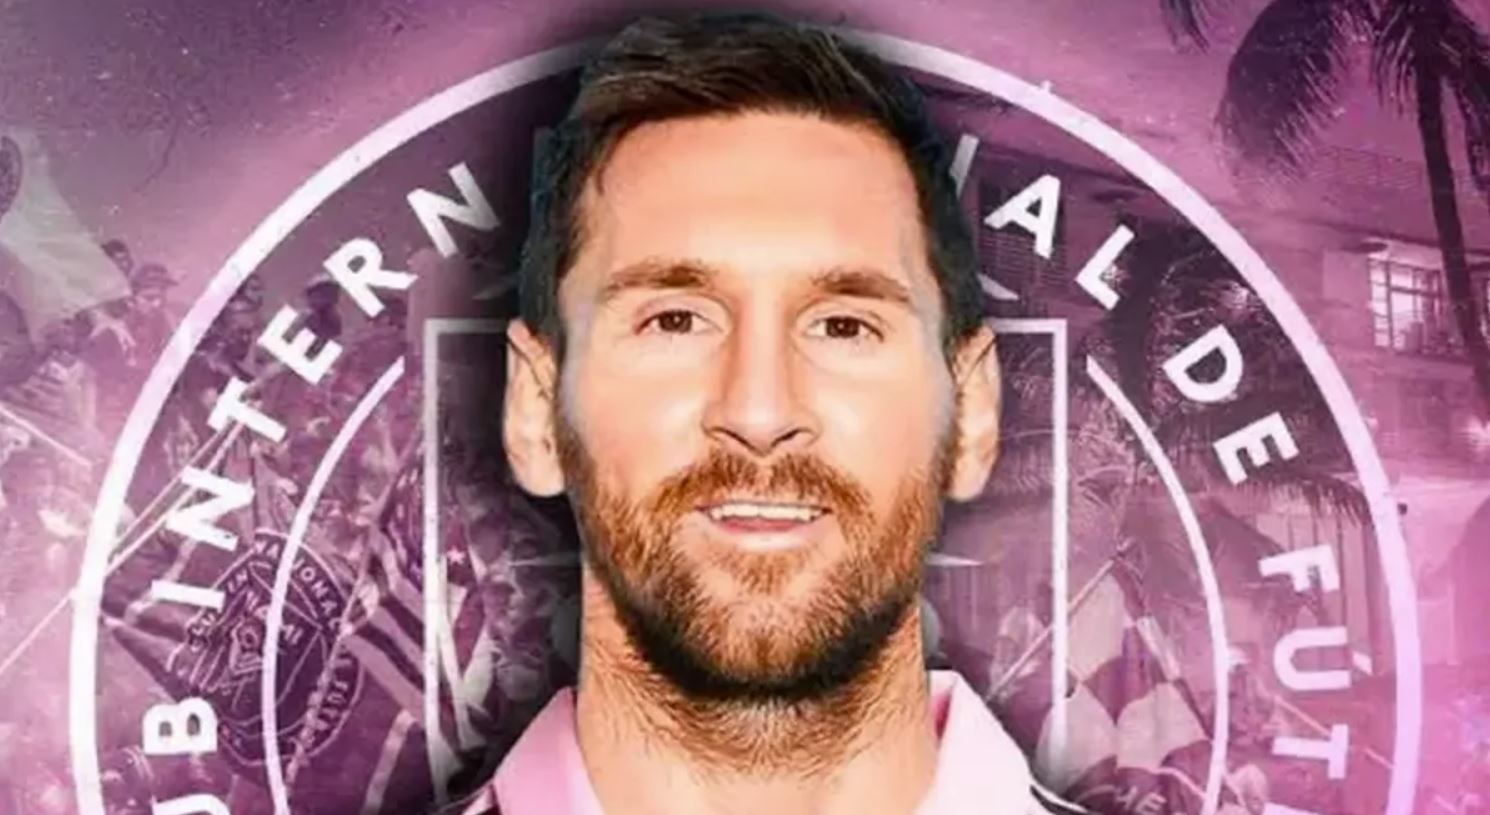 Lionel Messi inter miami انتقال ميسي الى ميامي عرب جيمرز